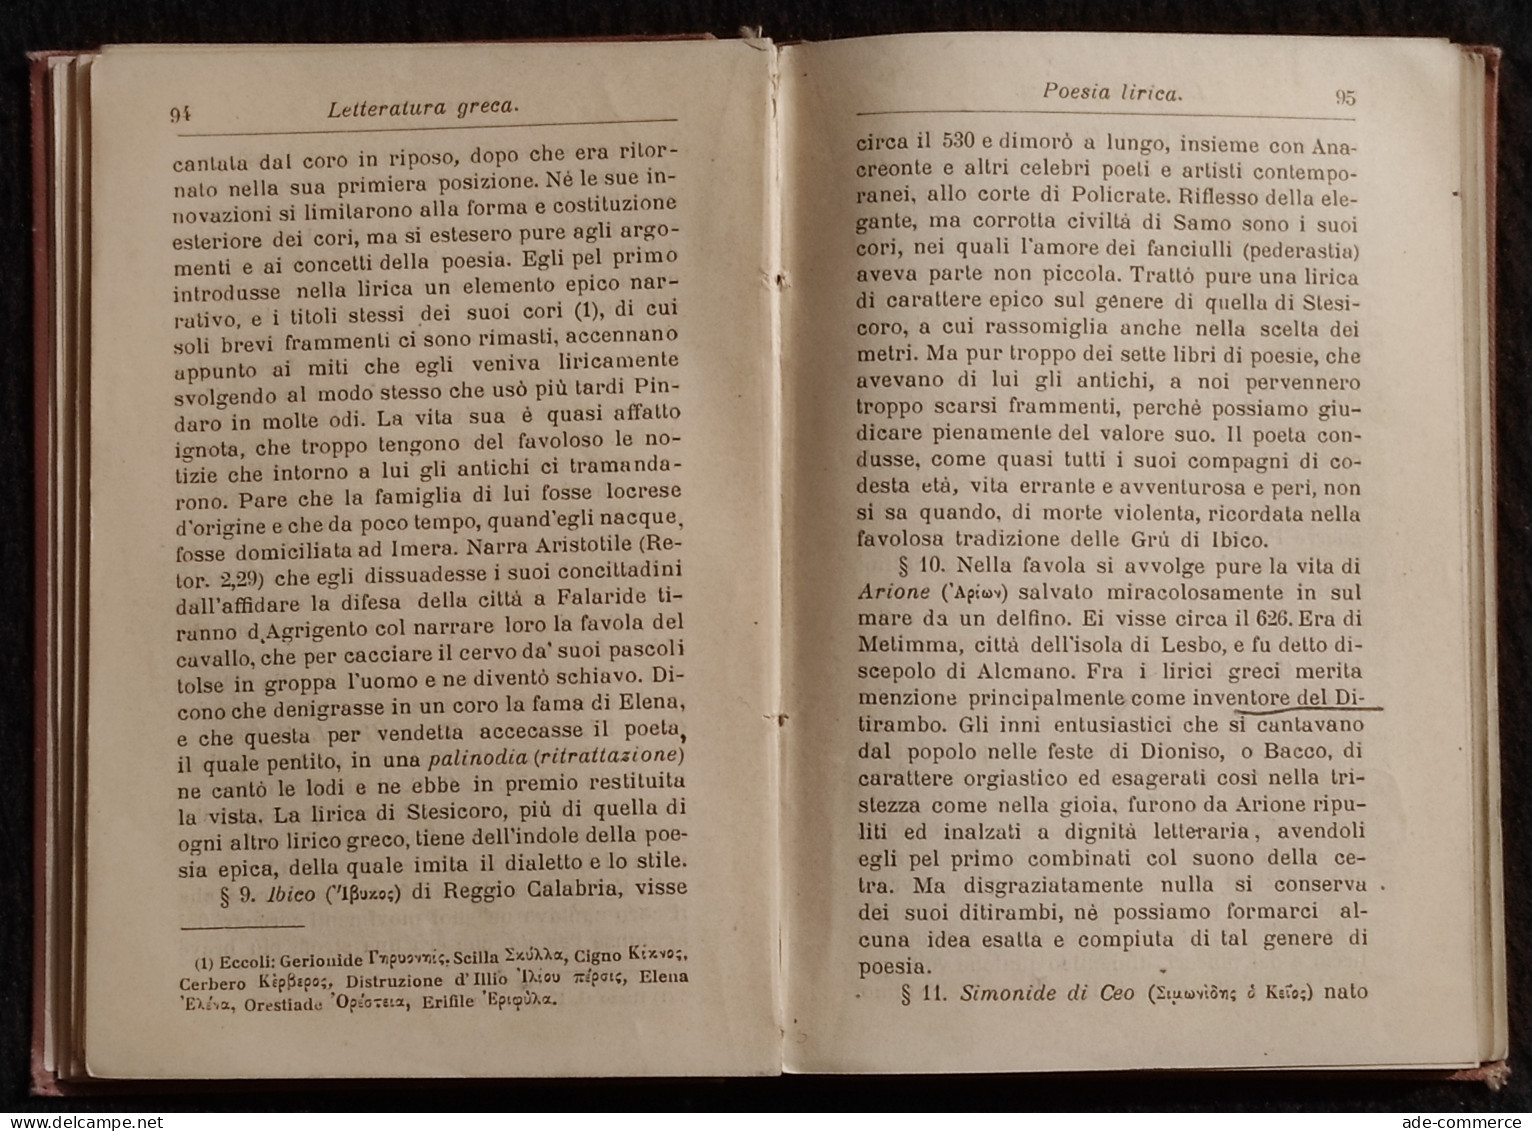 Letteraura Greca - V. Inama - Manuali Hoepli - 1907 - Handbücher Für Sammler